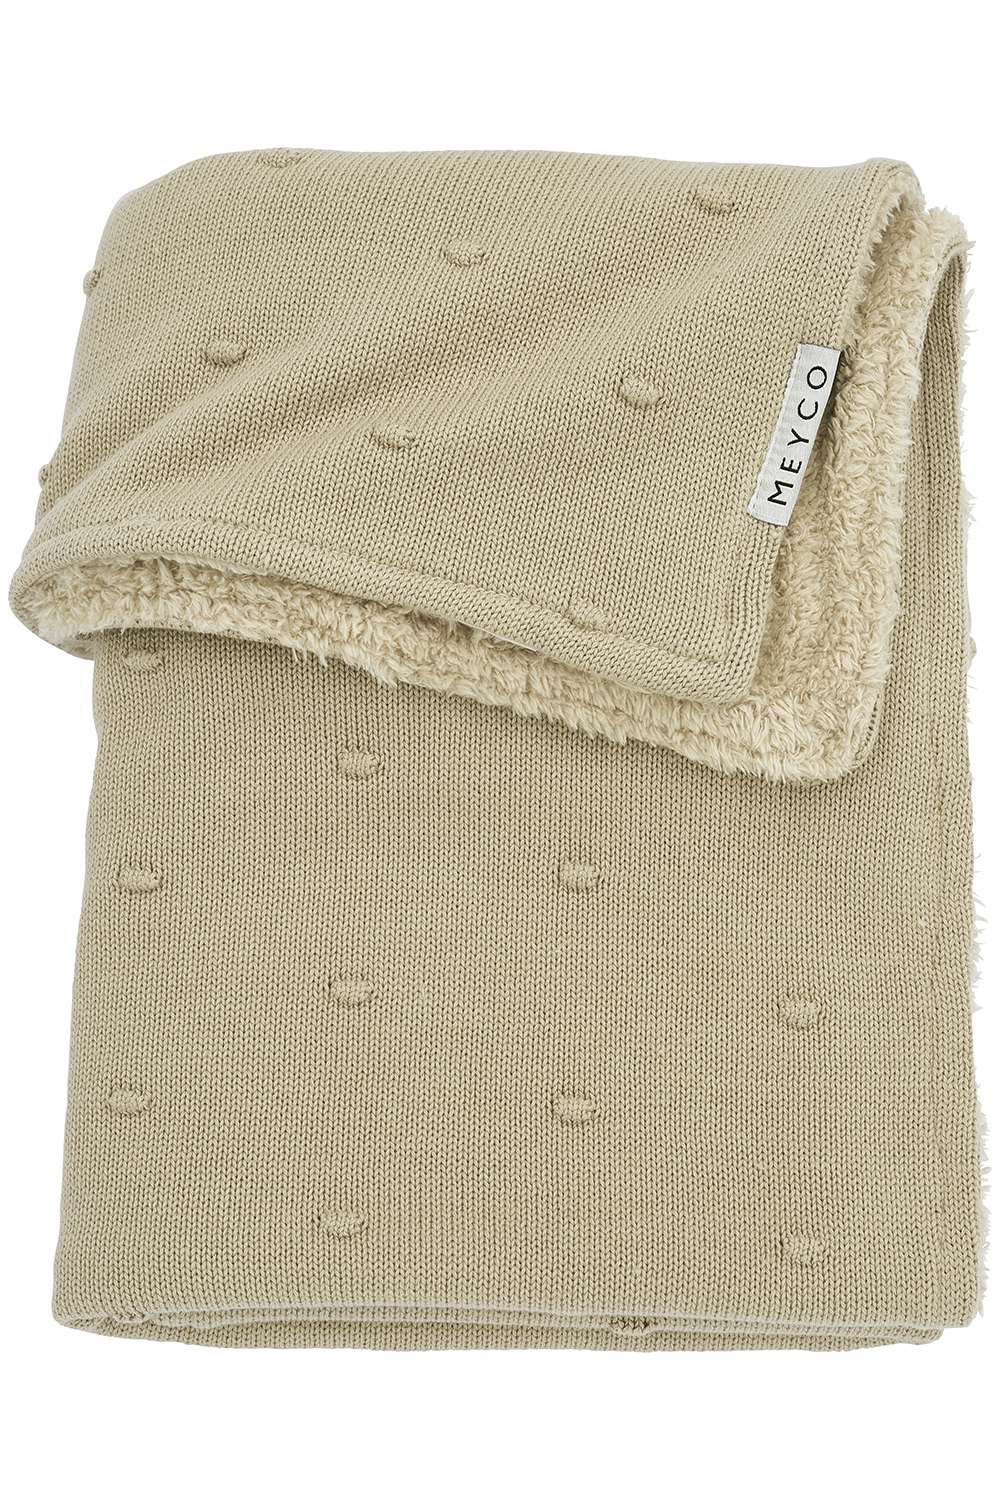 Crib bed blanket Mini Knots teddy - sand - 75x100cm